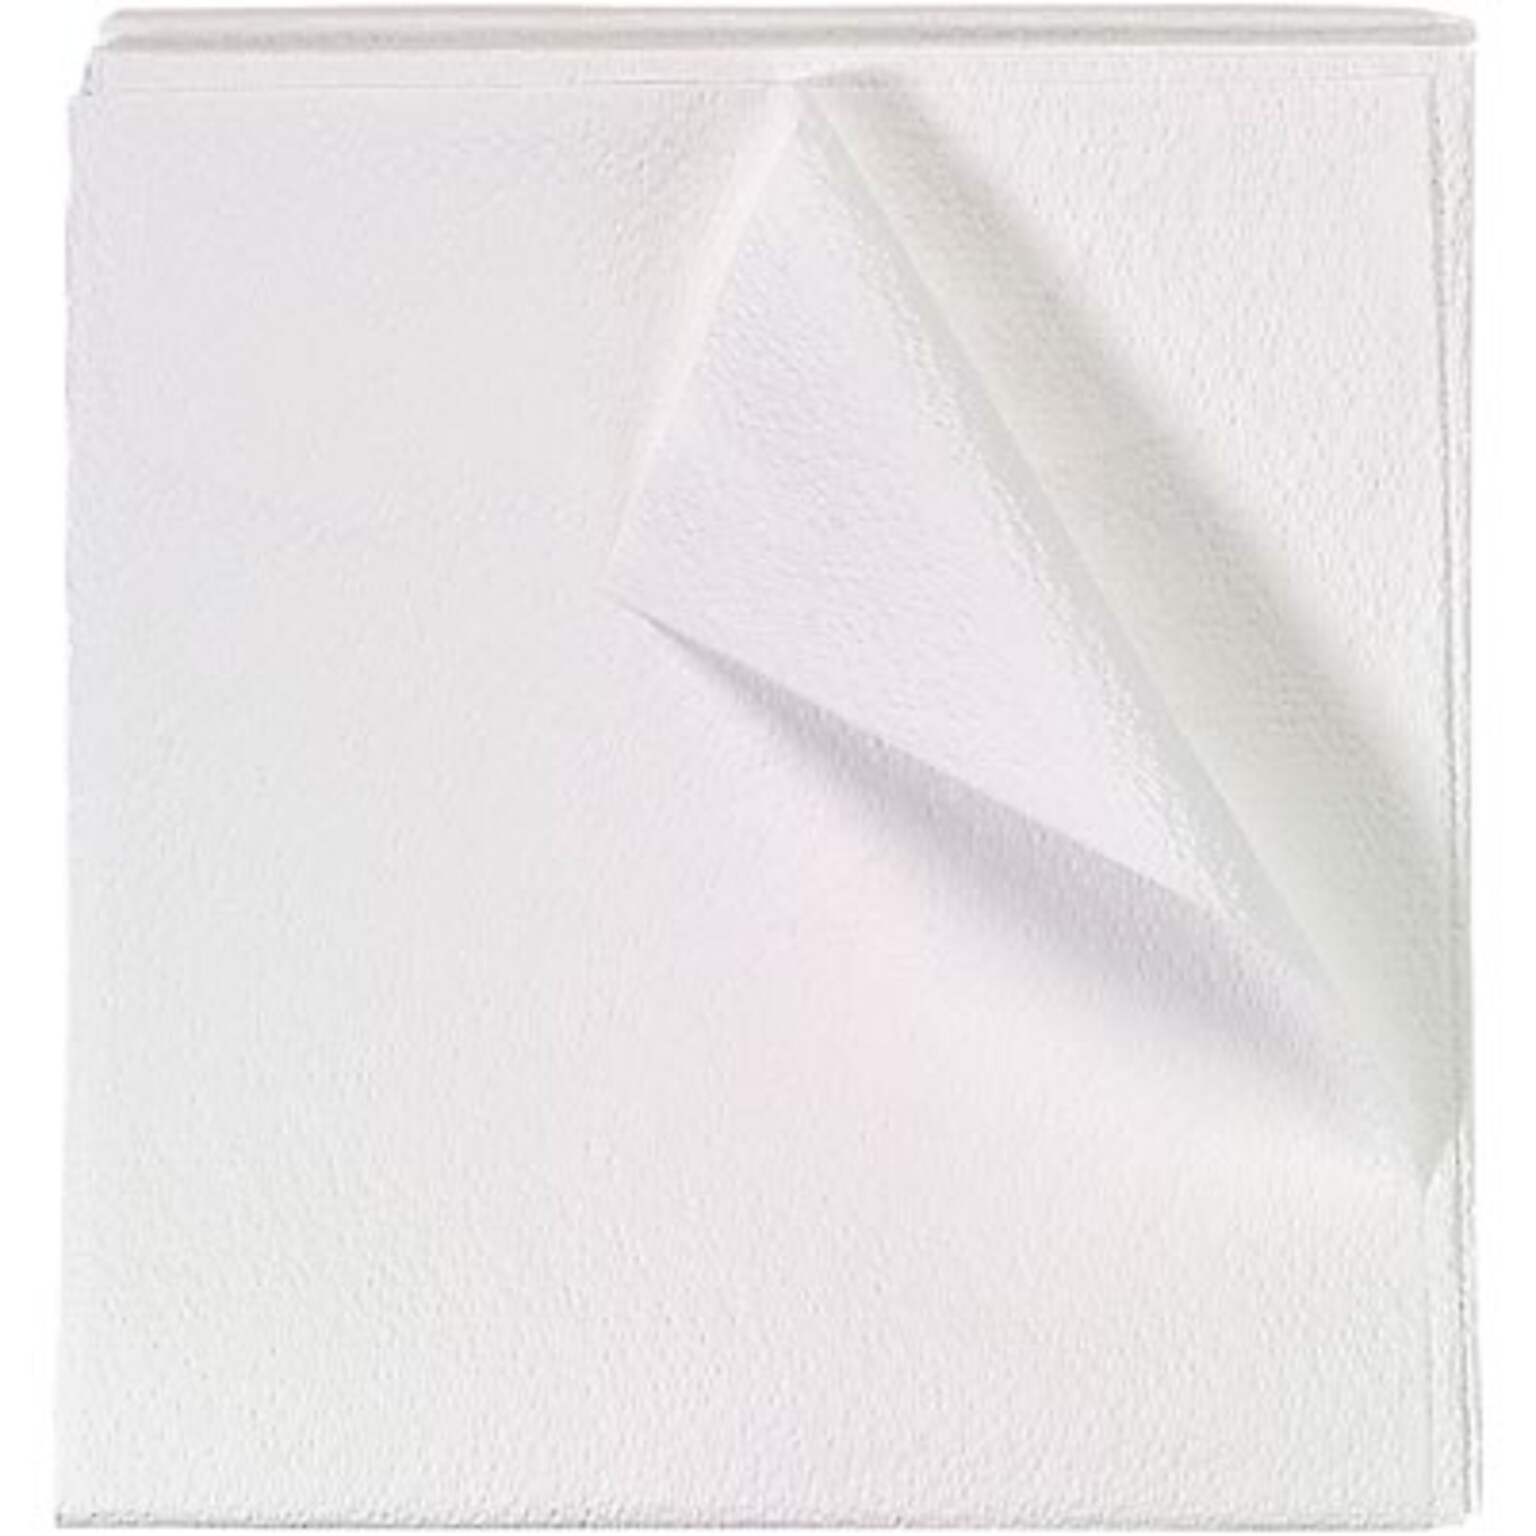 TIDI® Disposable Drape Sheets-Everyday; 2/Ply Tissue, 40x60, White, 100/Carton (9810826)